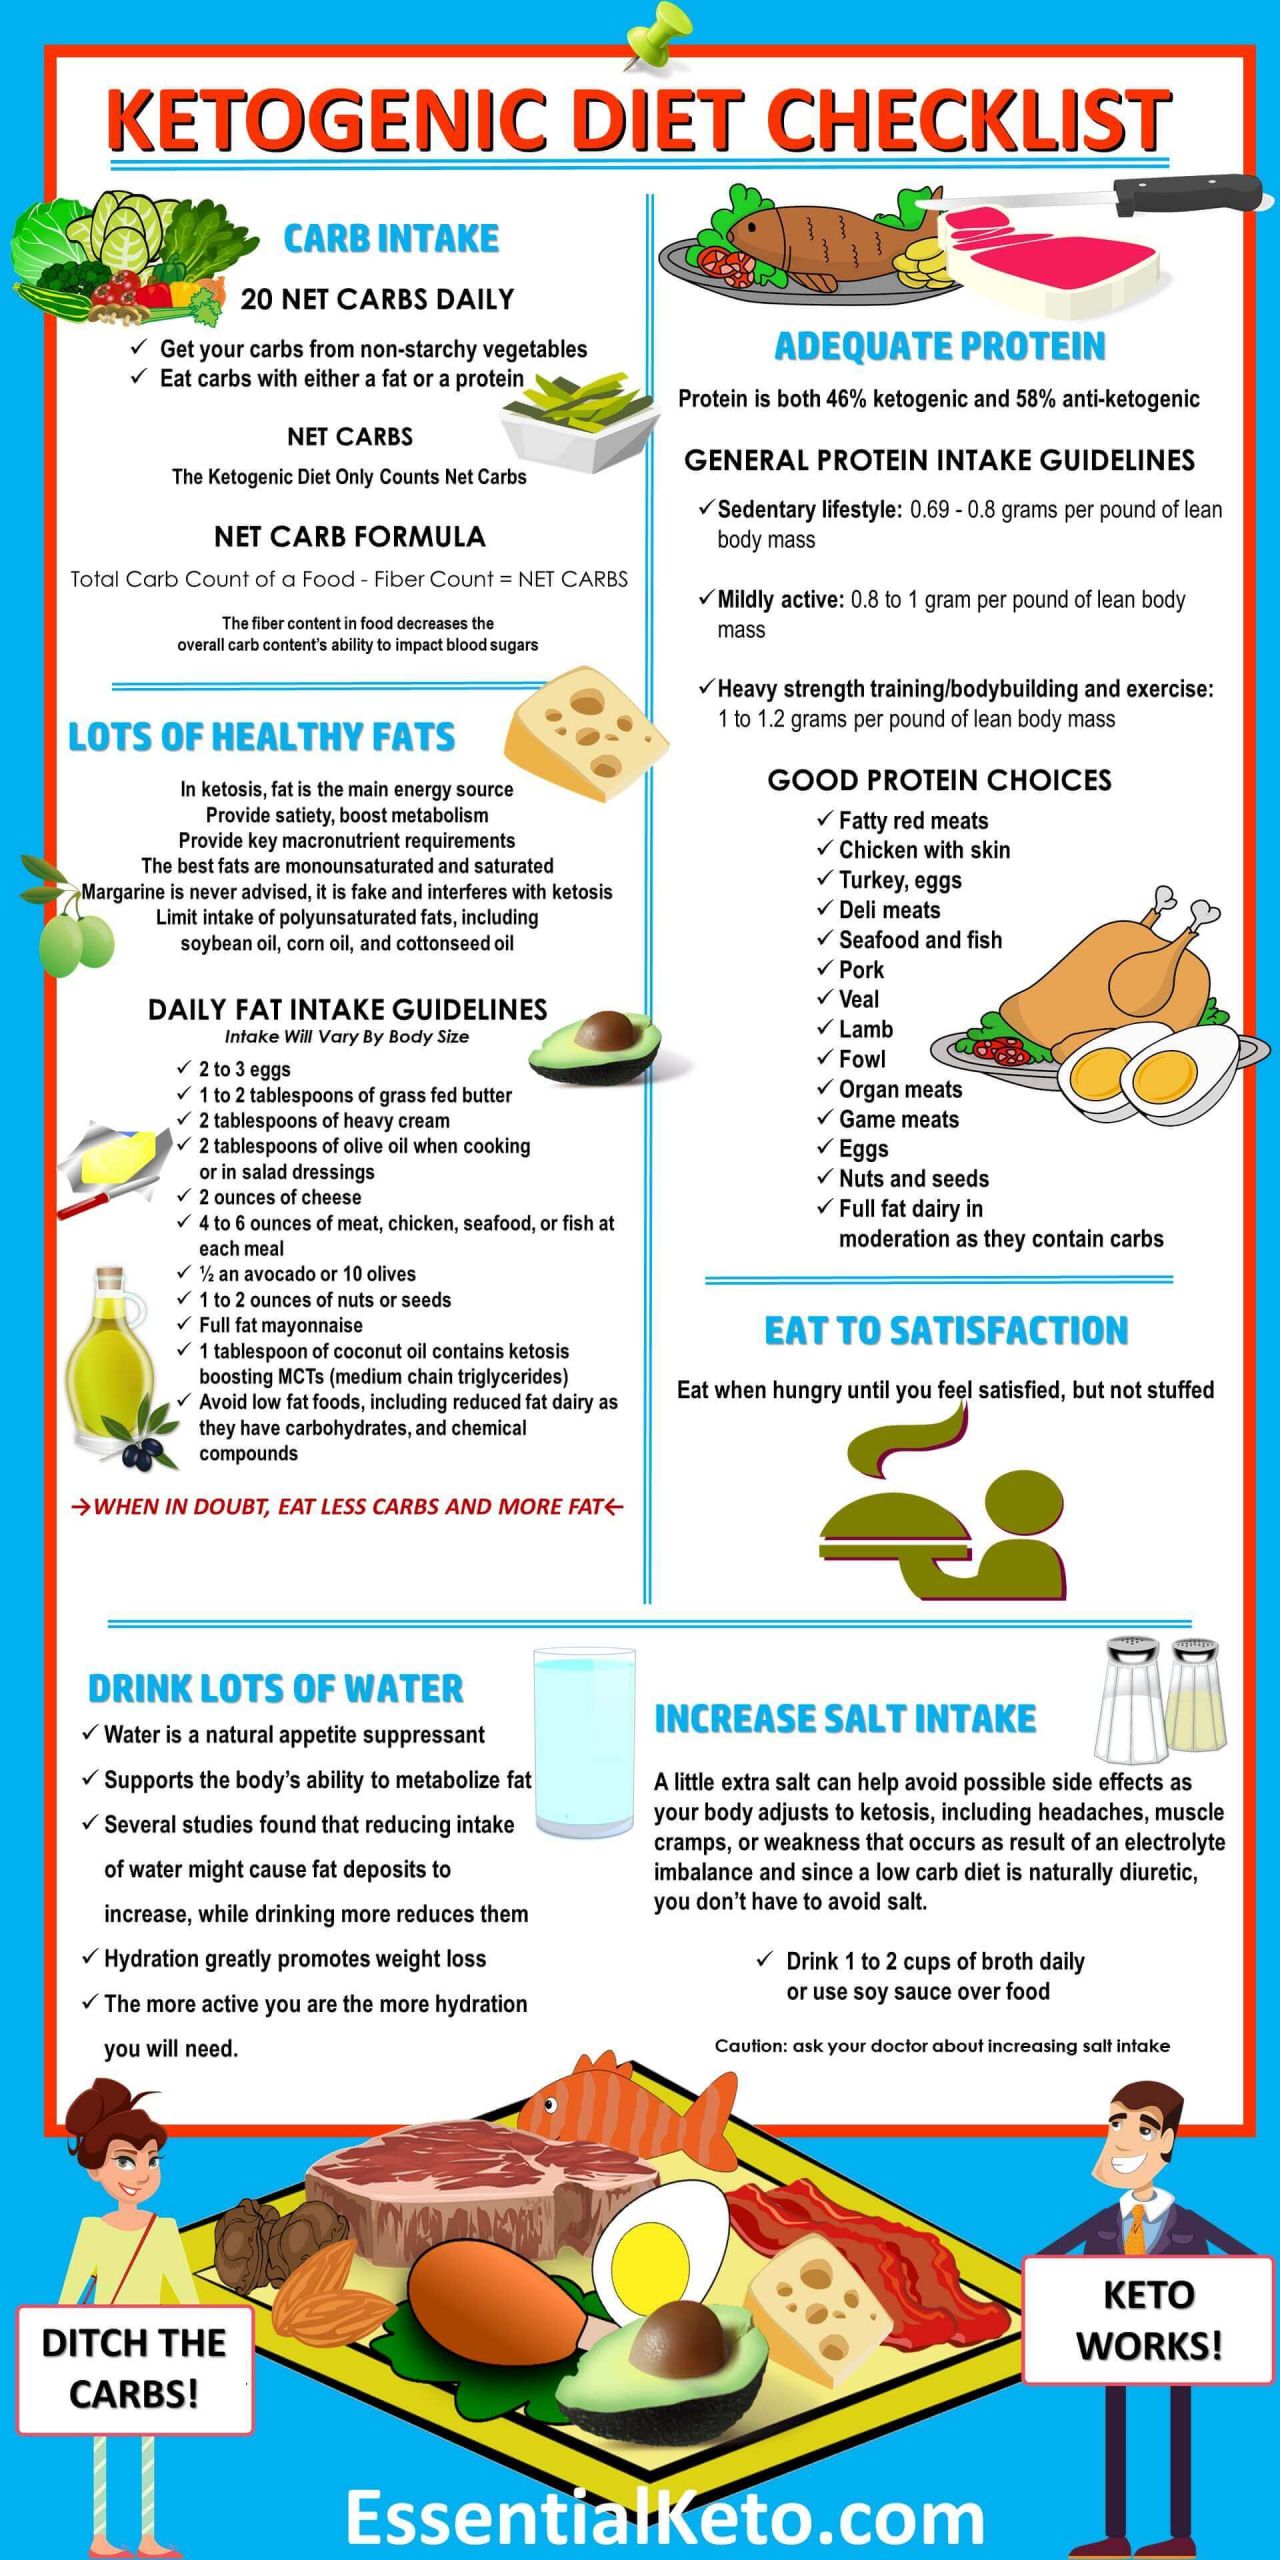 Keto Diet Foods To Eat
 Ketogenic Diet Foods Checklist